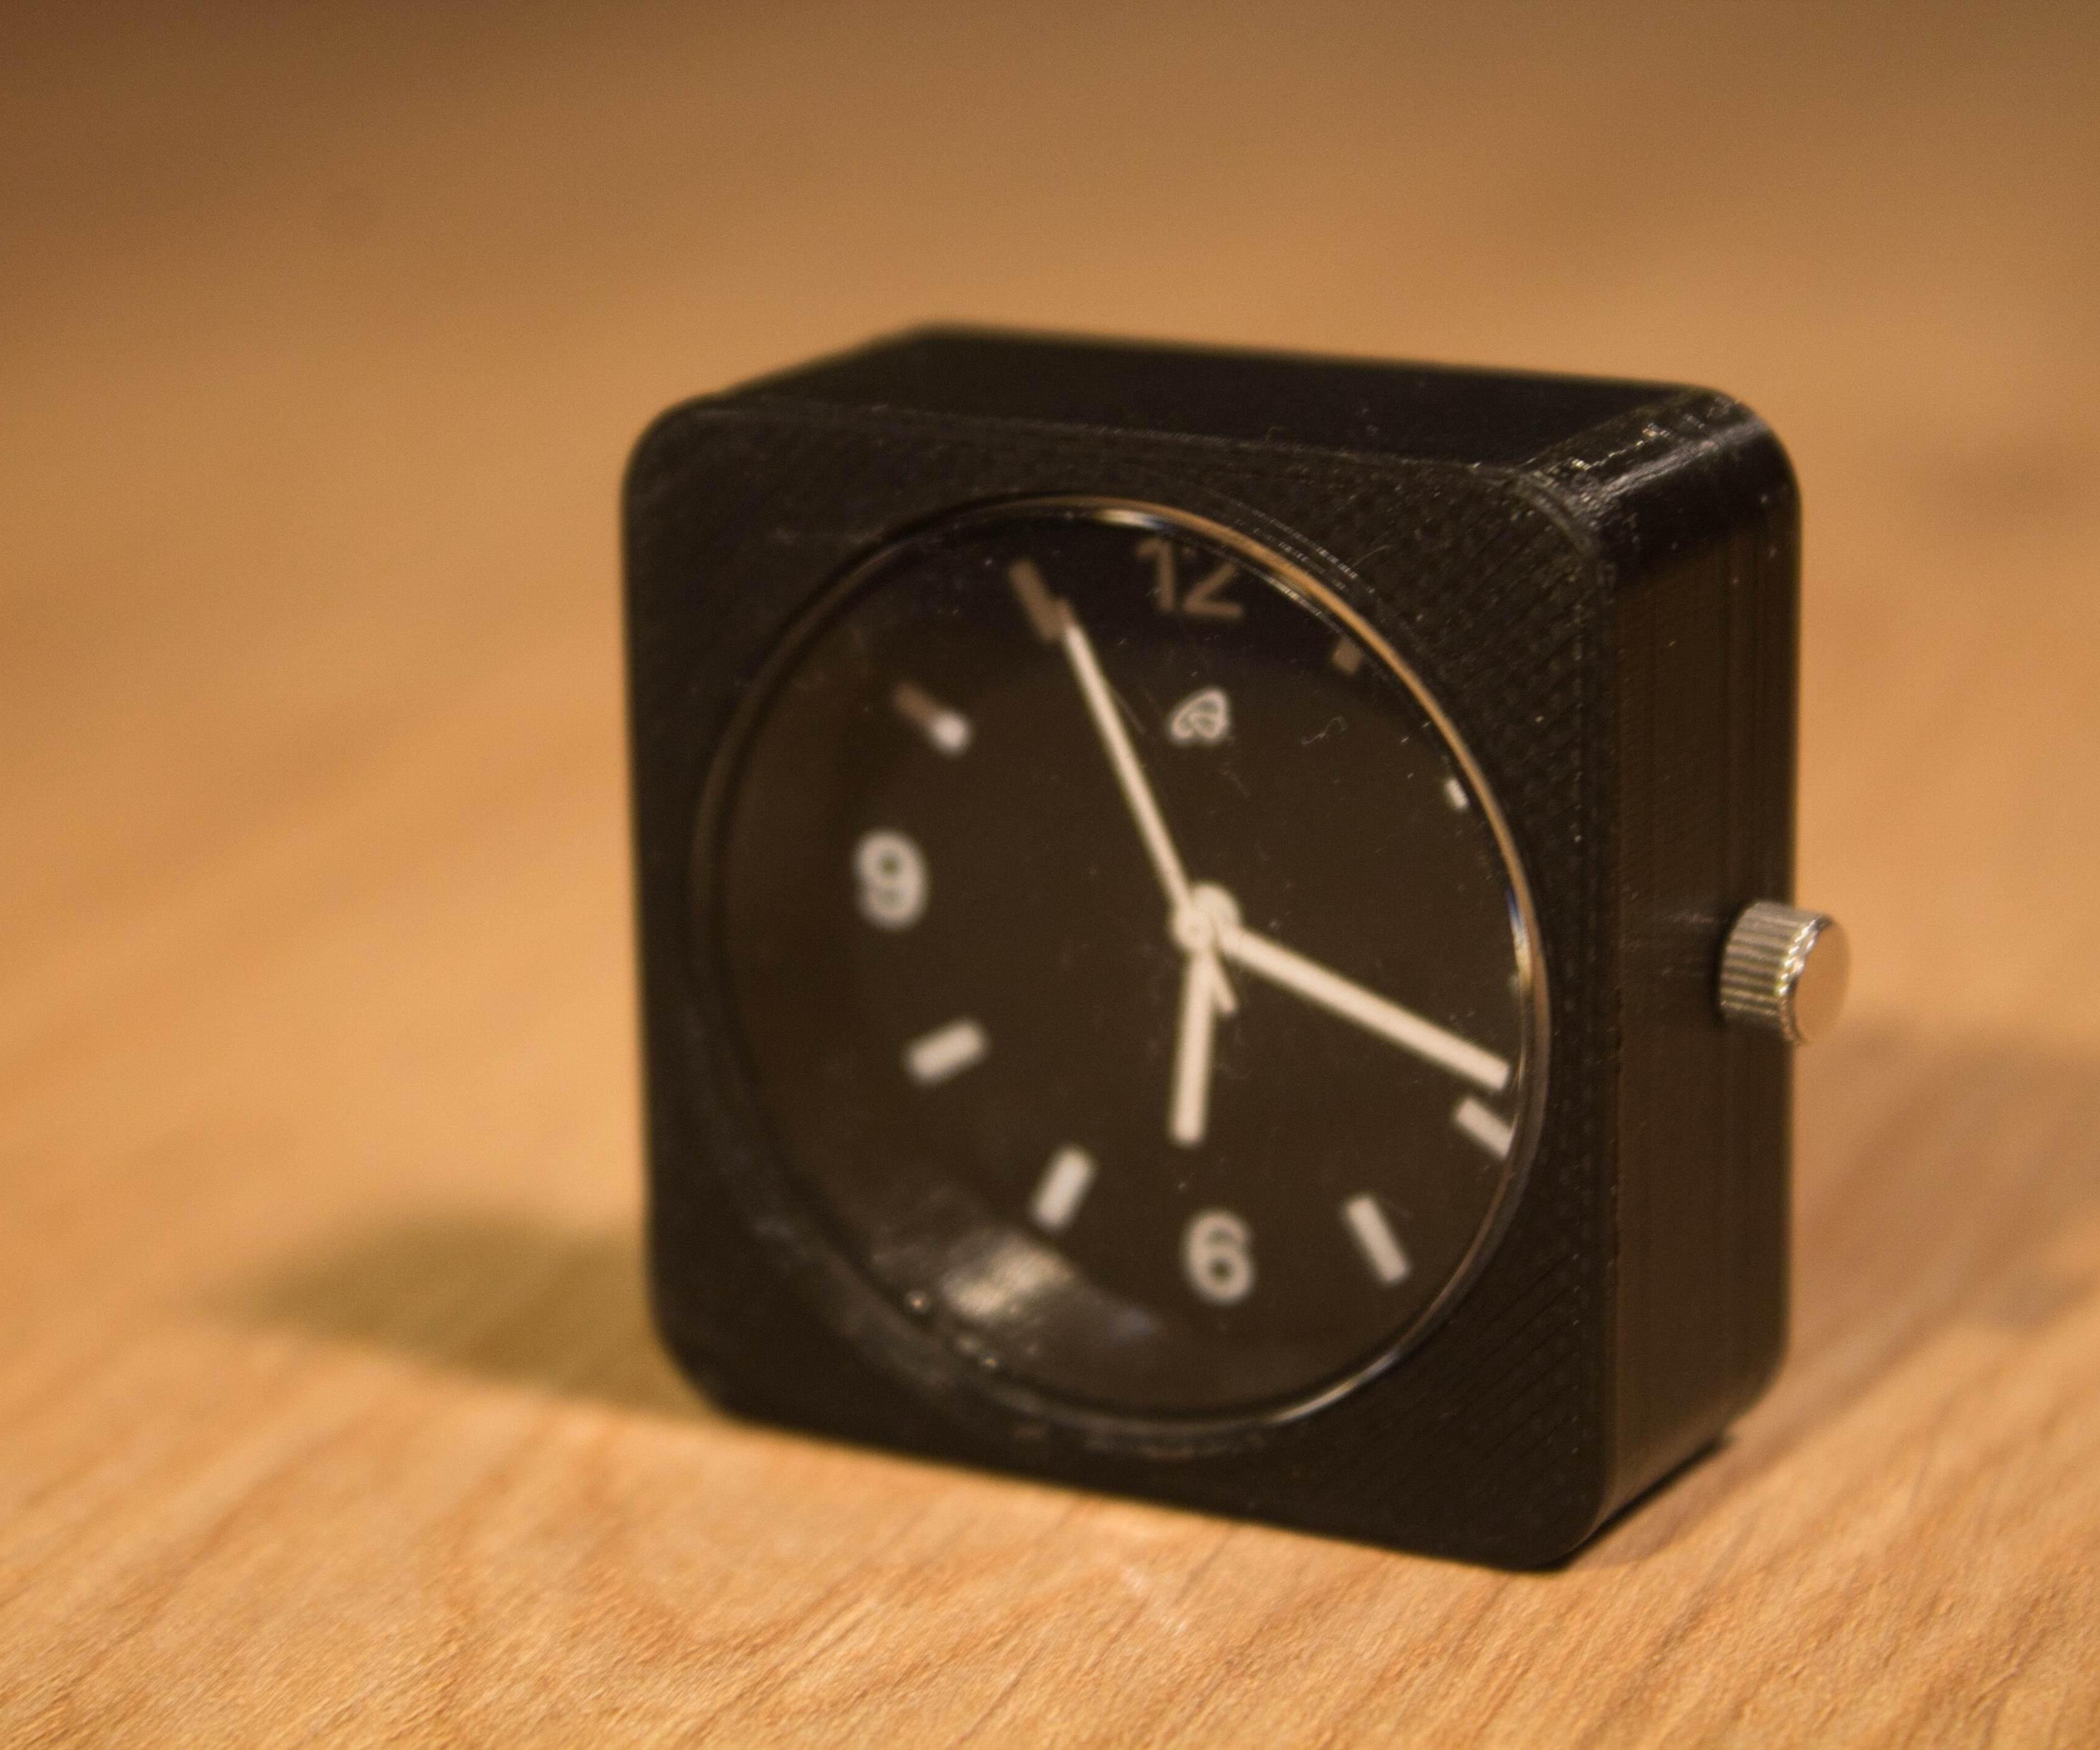 Converting a Wristwatch Into a Desk Clock